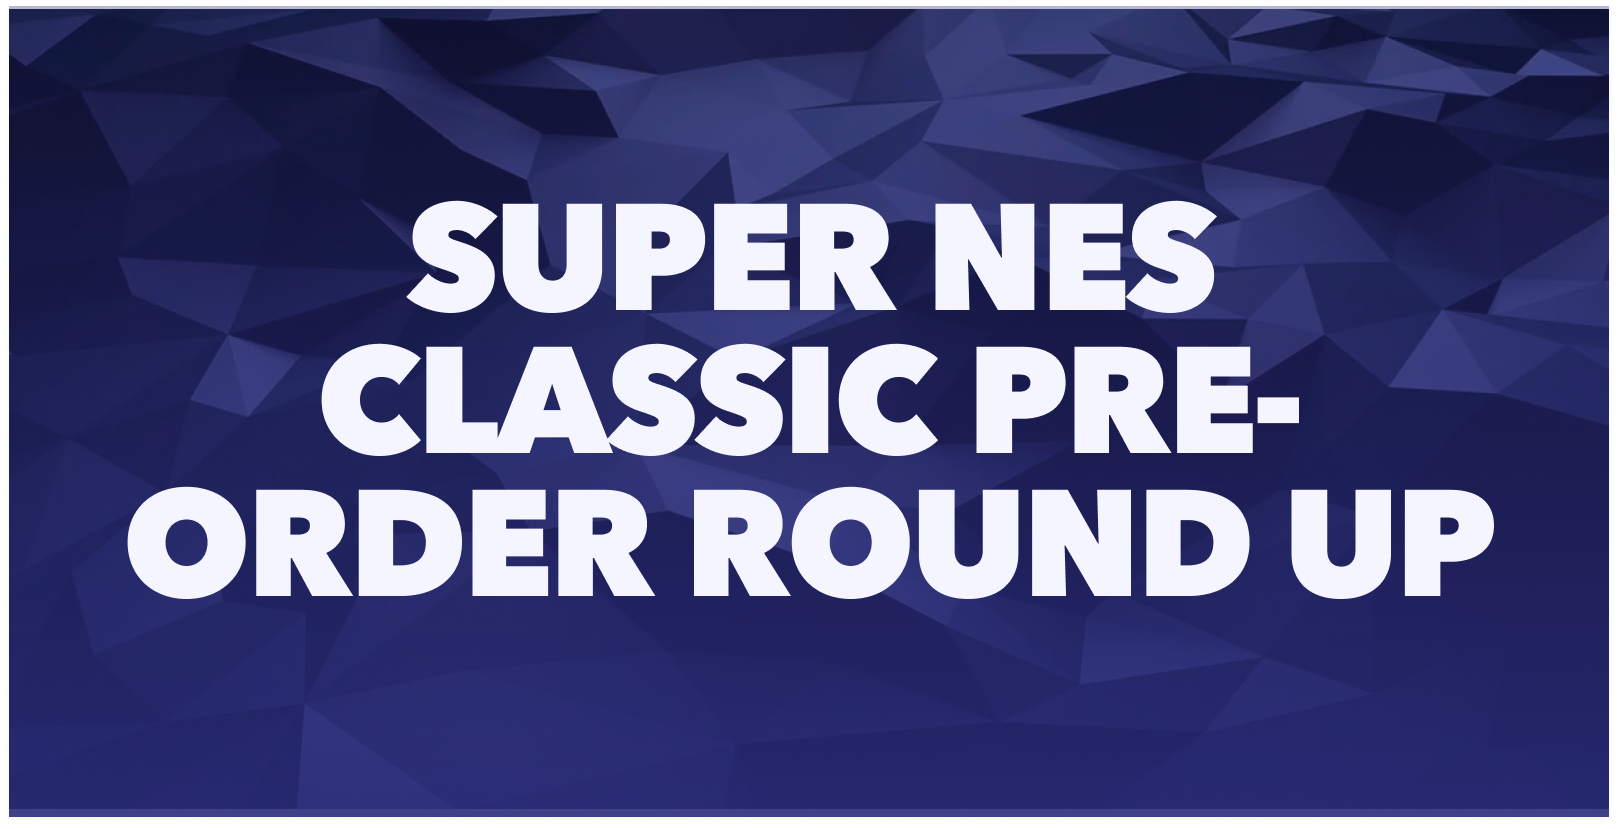 Super NES Classic Pre-Order Round Up Graphic